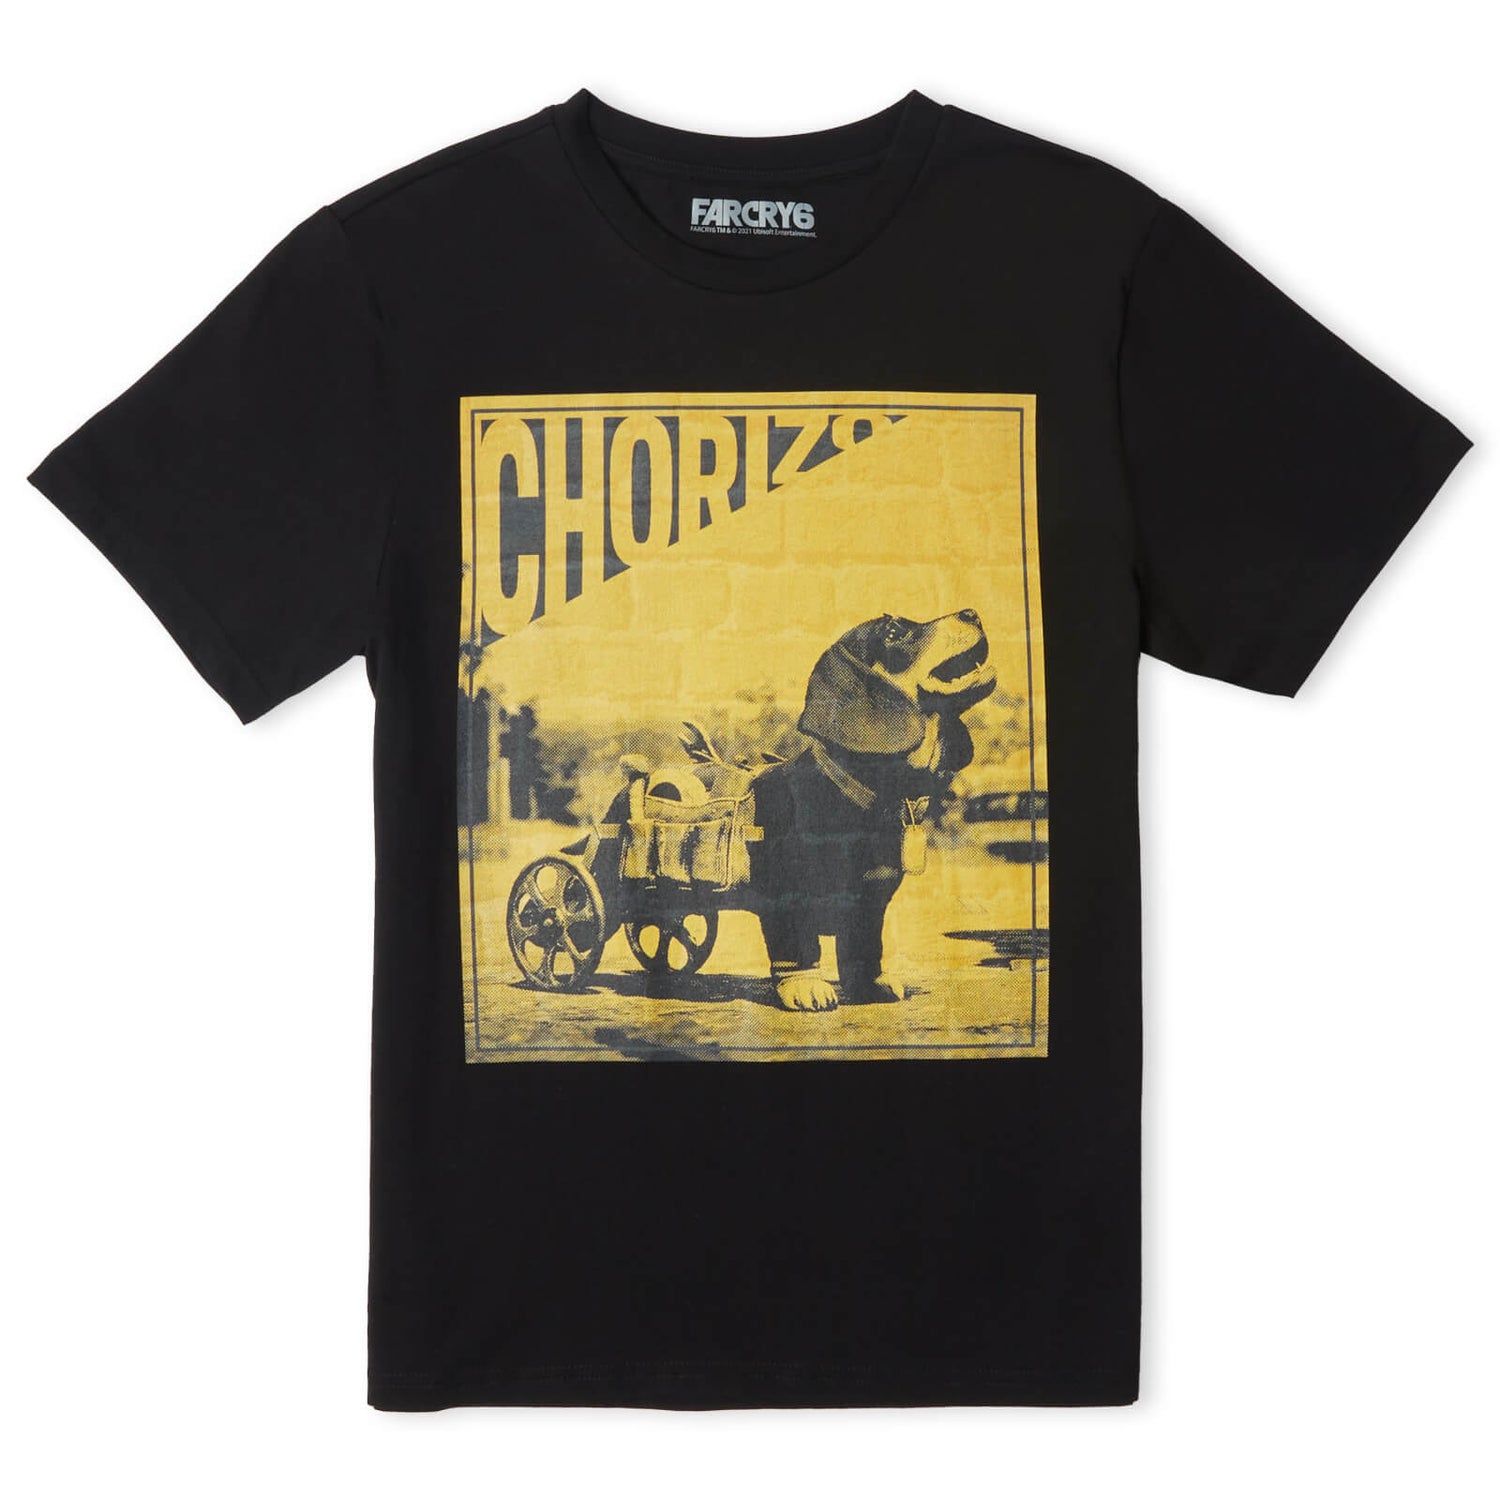 Far Cry 6 Chorizo Poster T-Shirt Femme - Noir